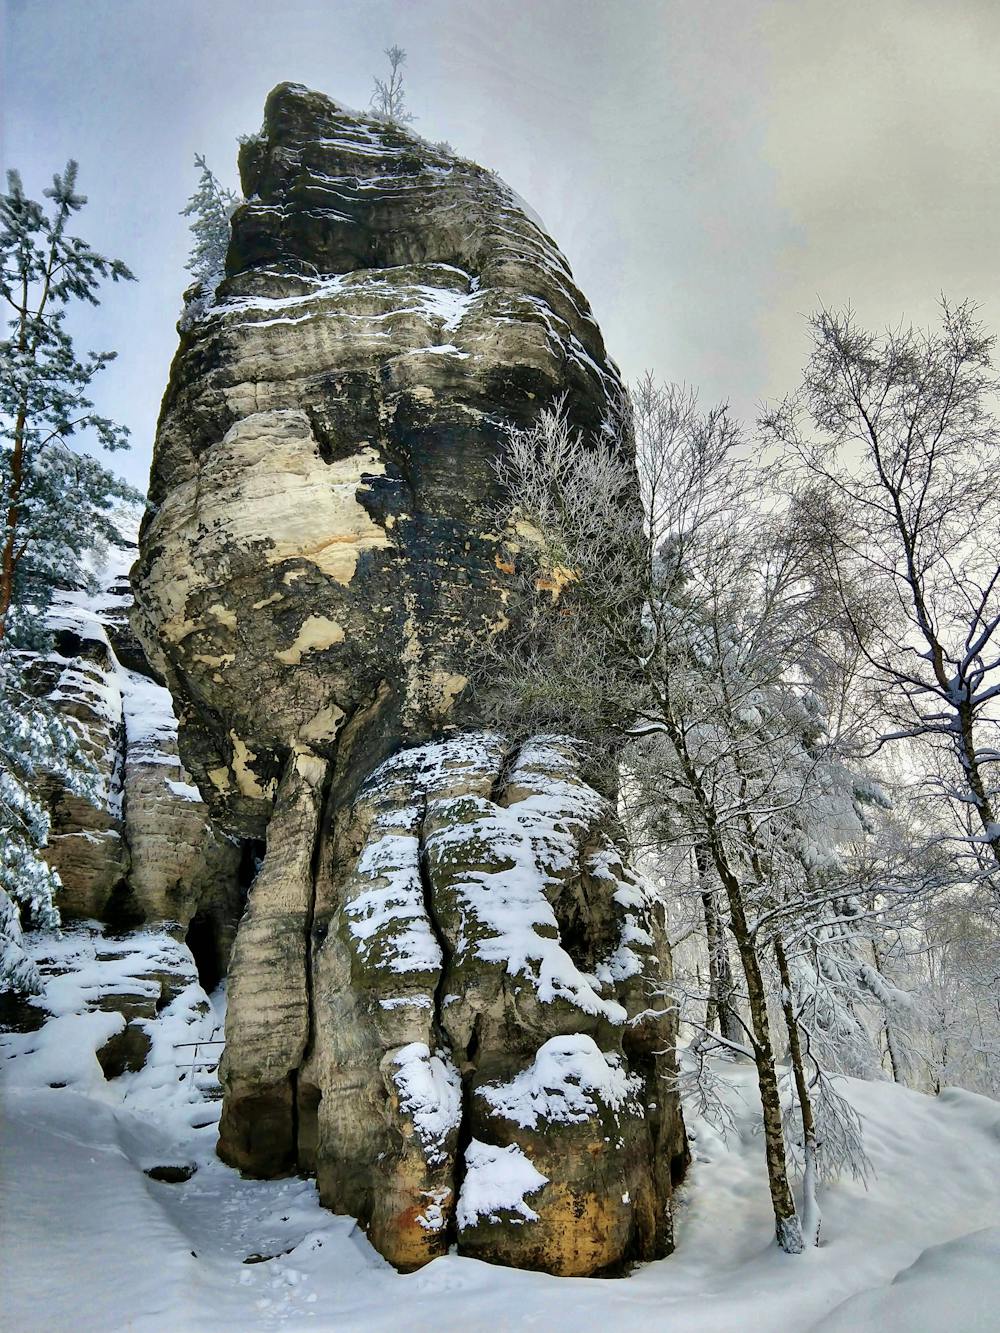 The Tisa Walls area is a popular rock climbing crag.